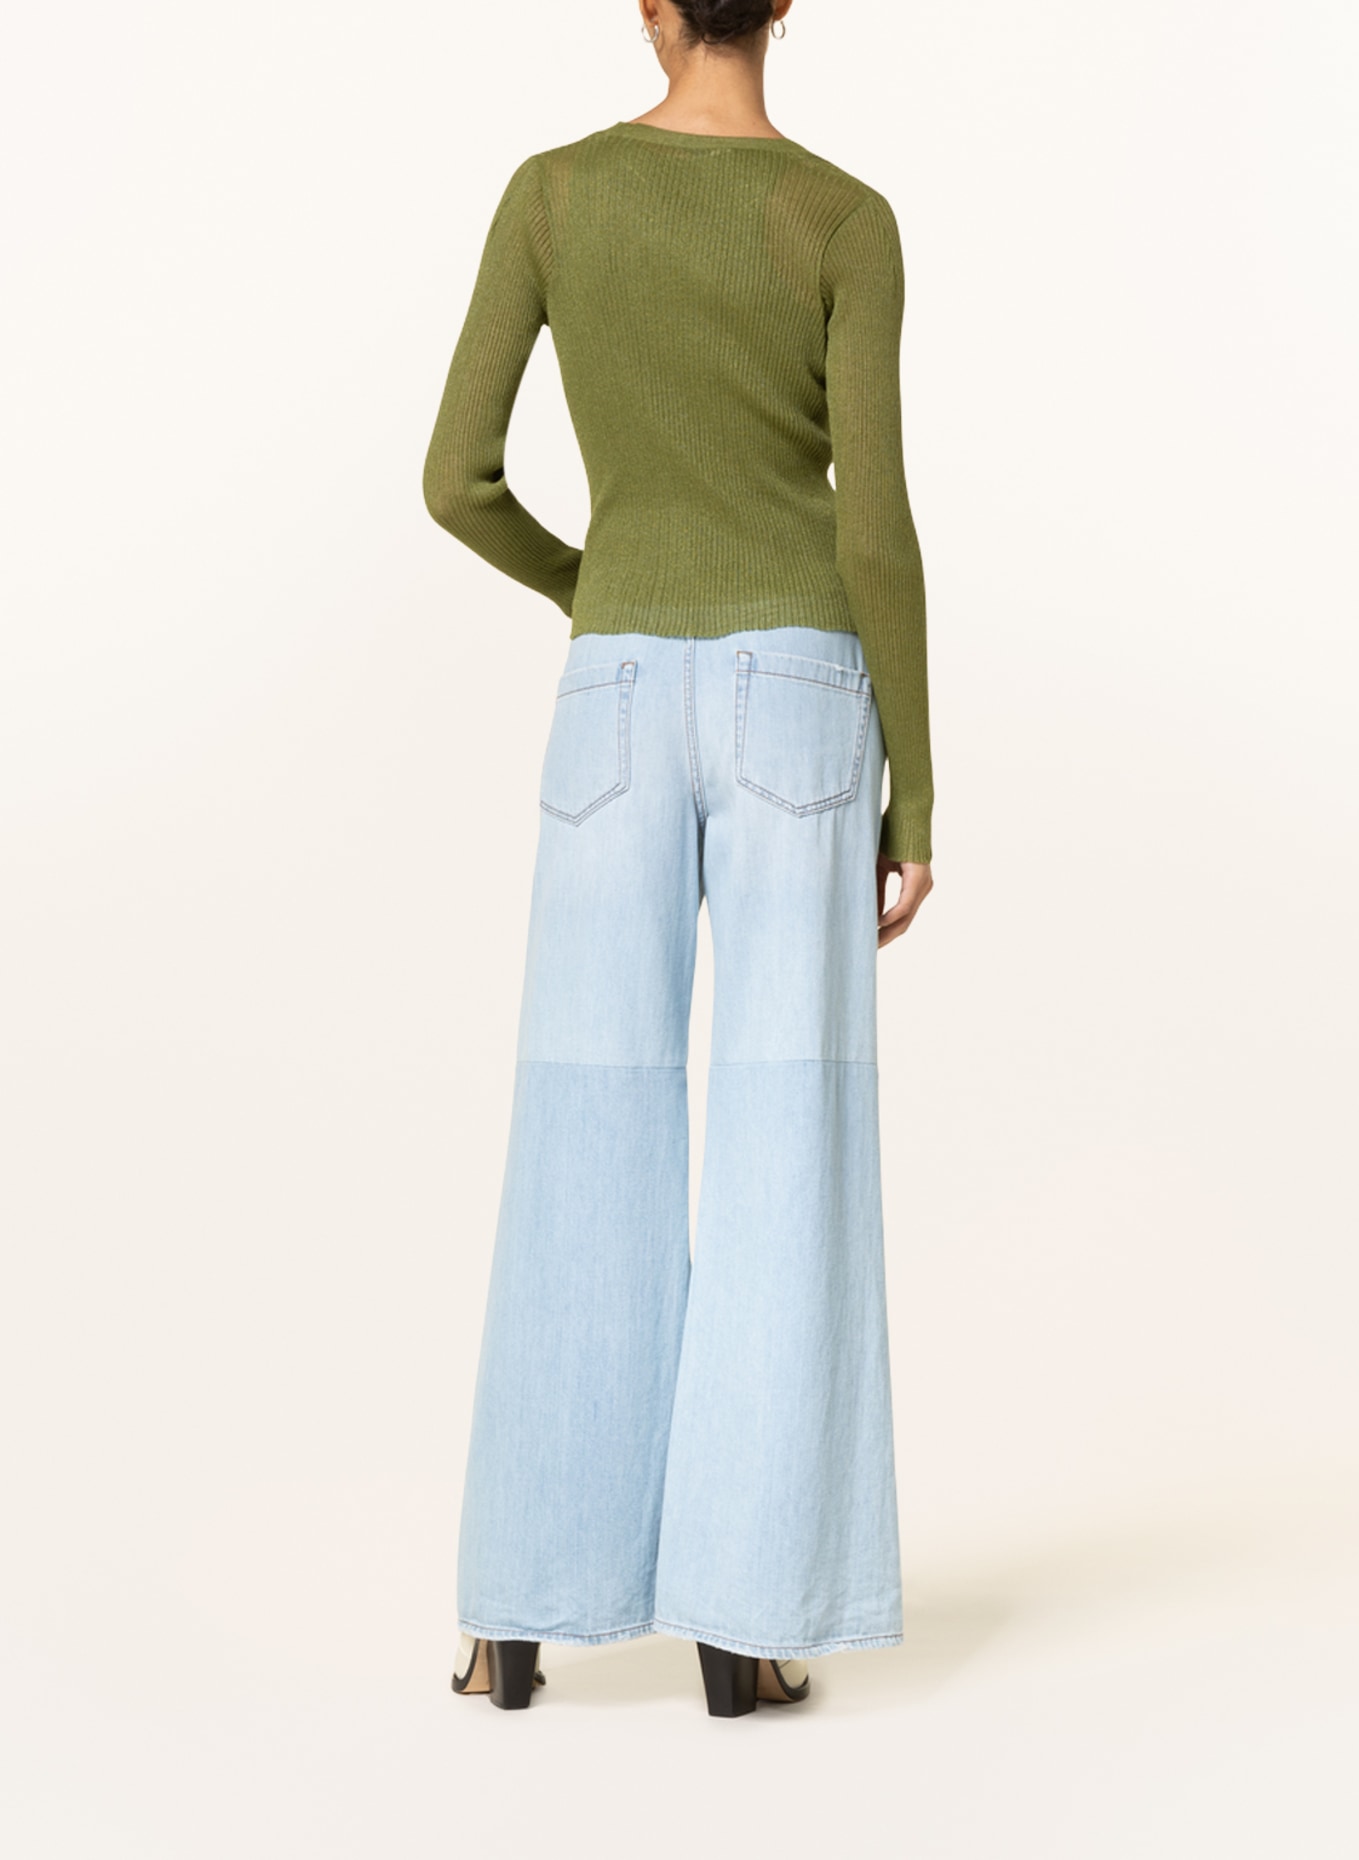 DOROTHEE SCHUMACHER Set: Knit top and cardigan, Color: 561 oliv (Image 3)